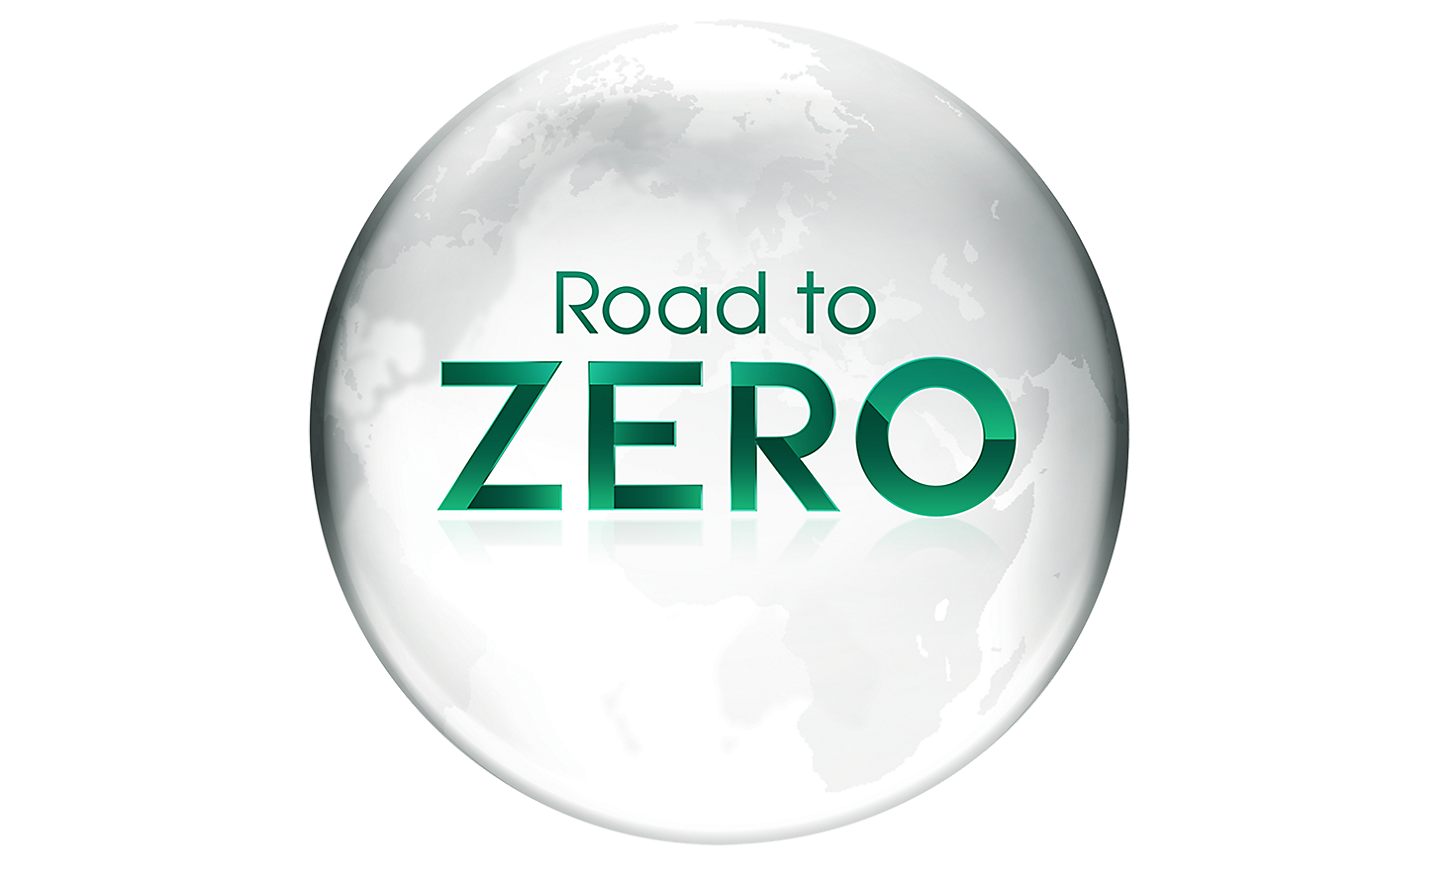 Image of the Road to ZERO logo